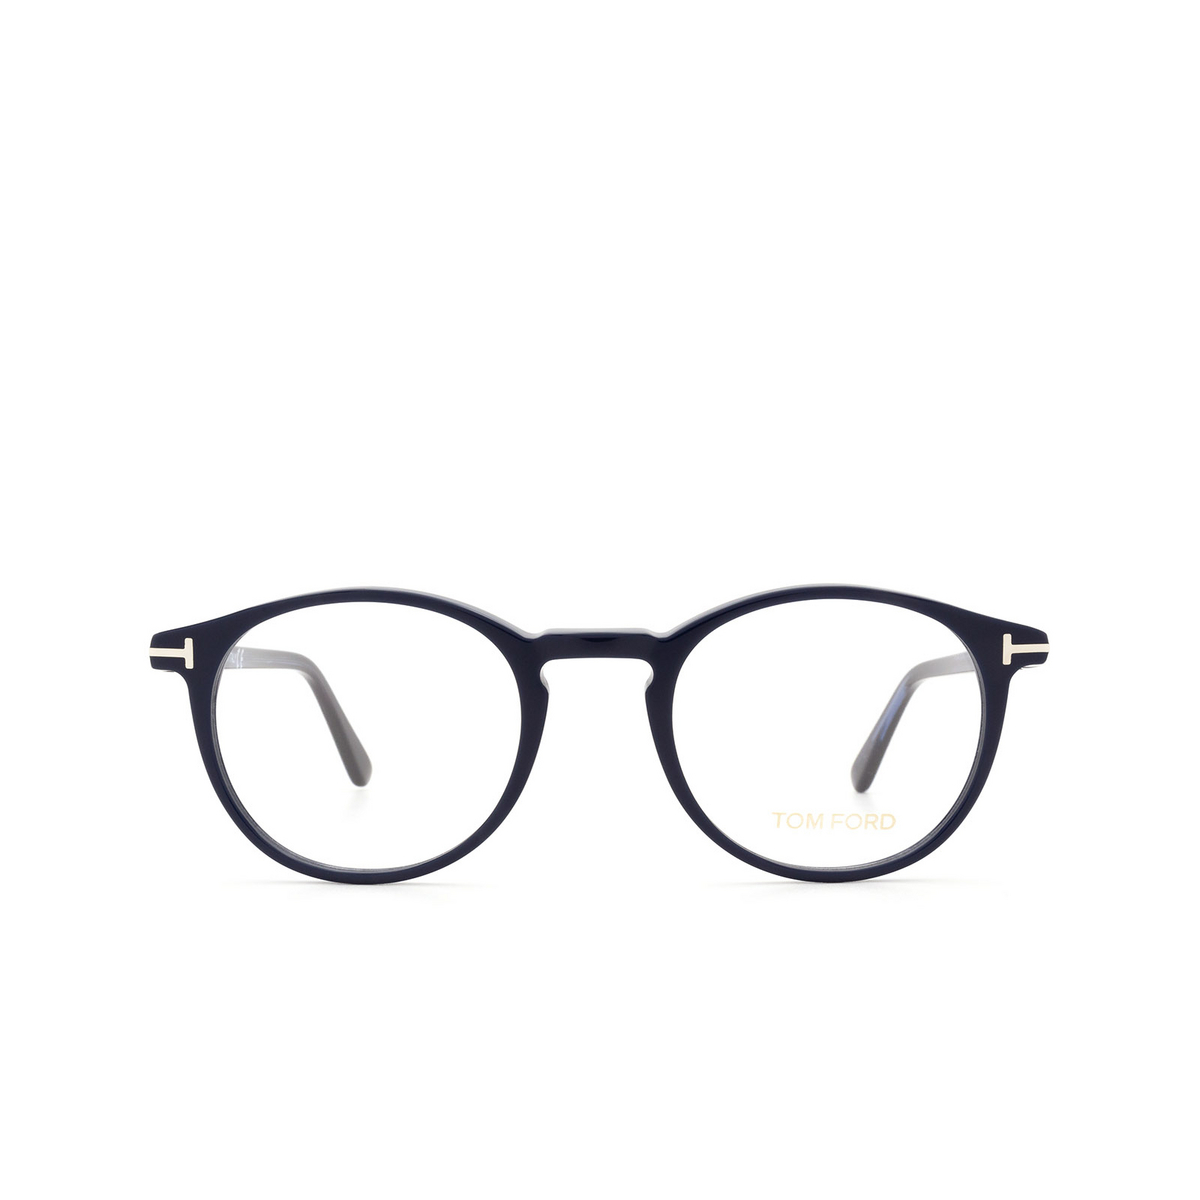 Tom Ford FT5294 Eyeglasses 090 Blue - front view